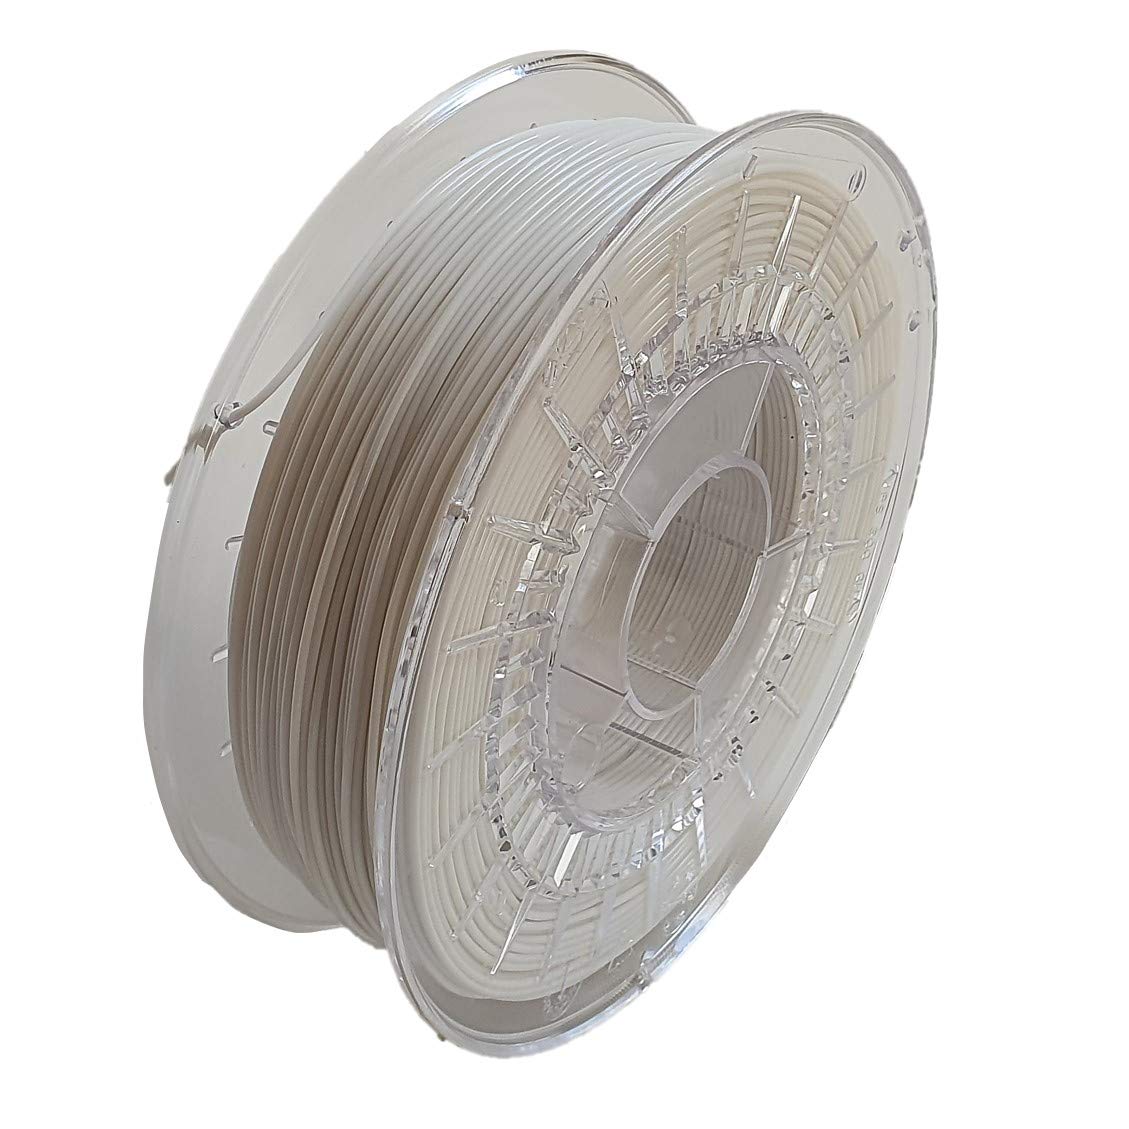 MeltFox recyceltes Filament aus PA 12 - Nylon 1,75 mm - Polar Bear White (weiß, 750) für den 3D Druck